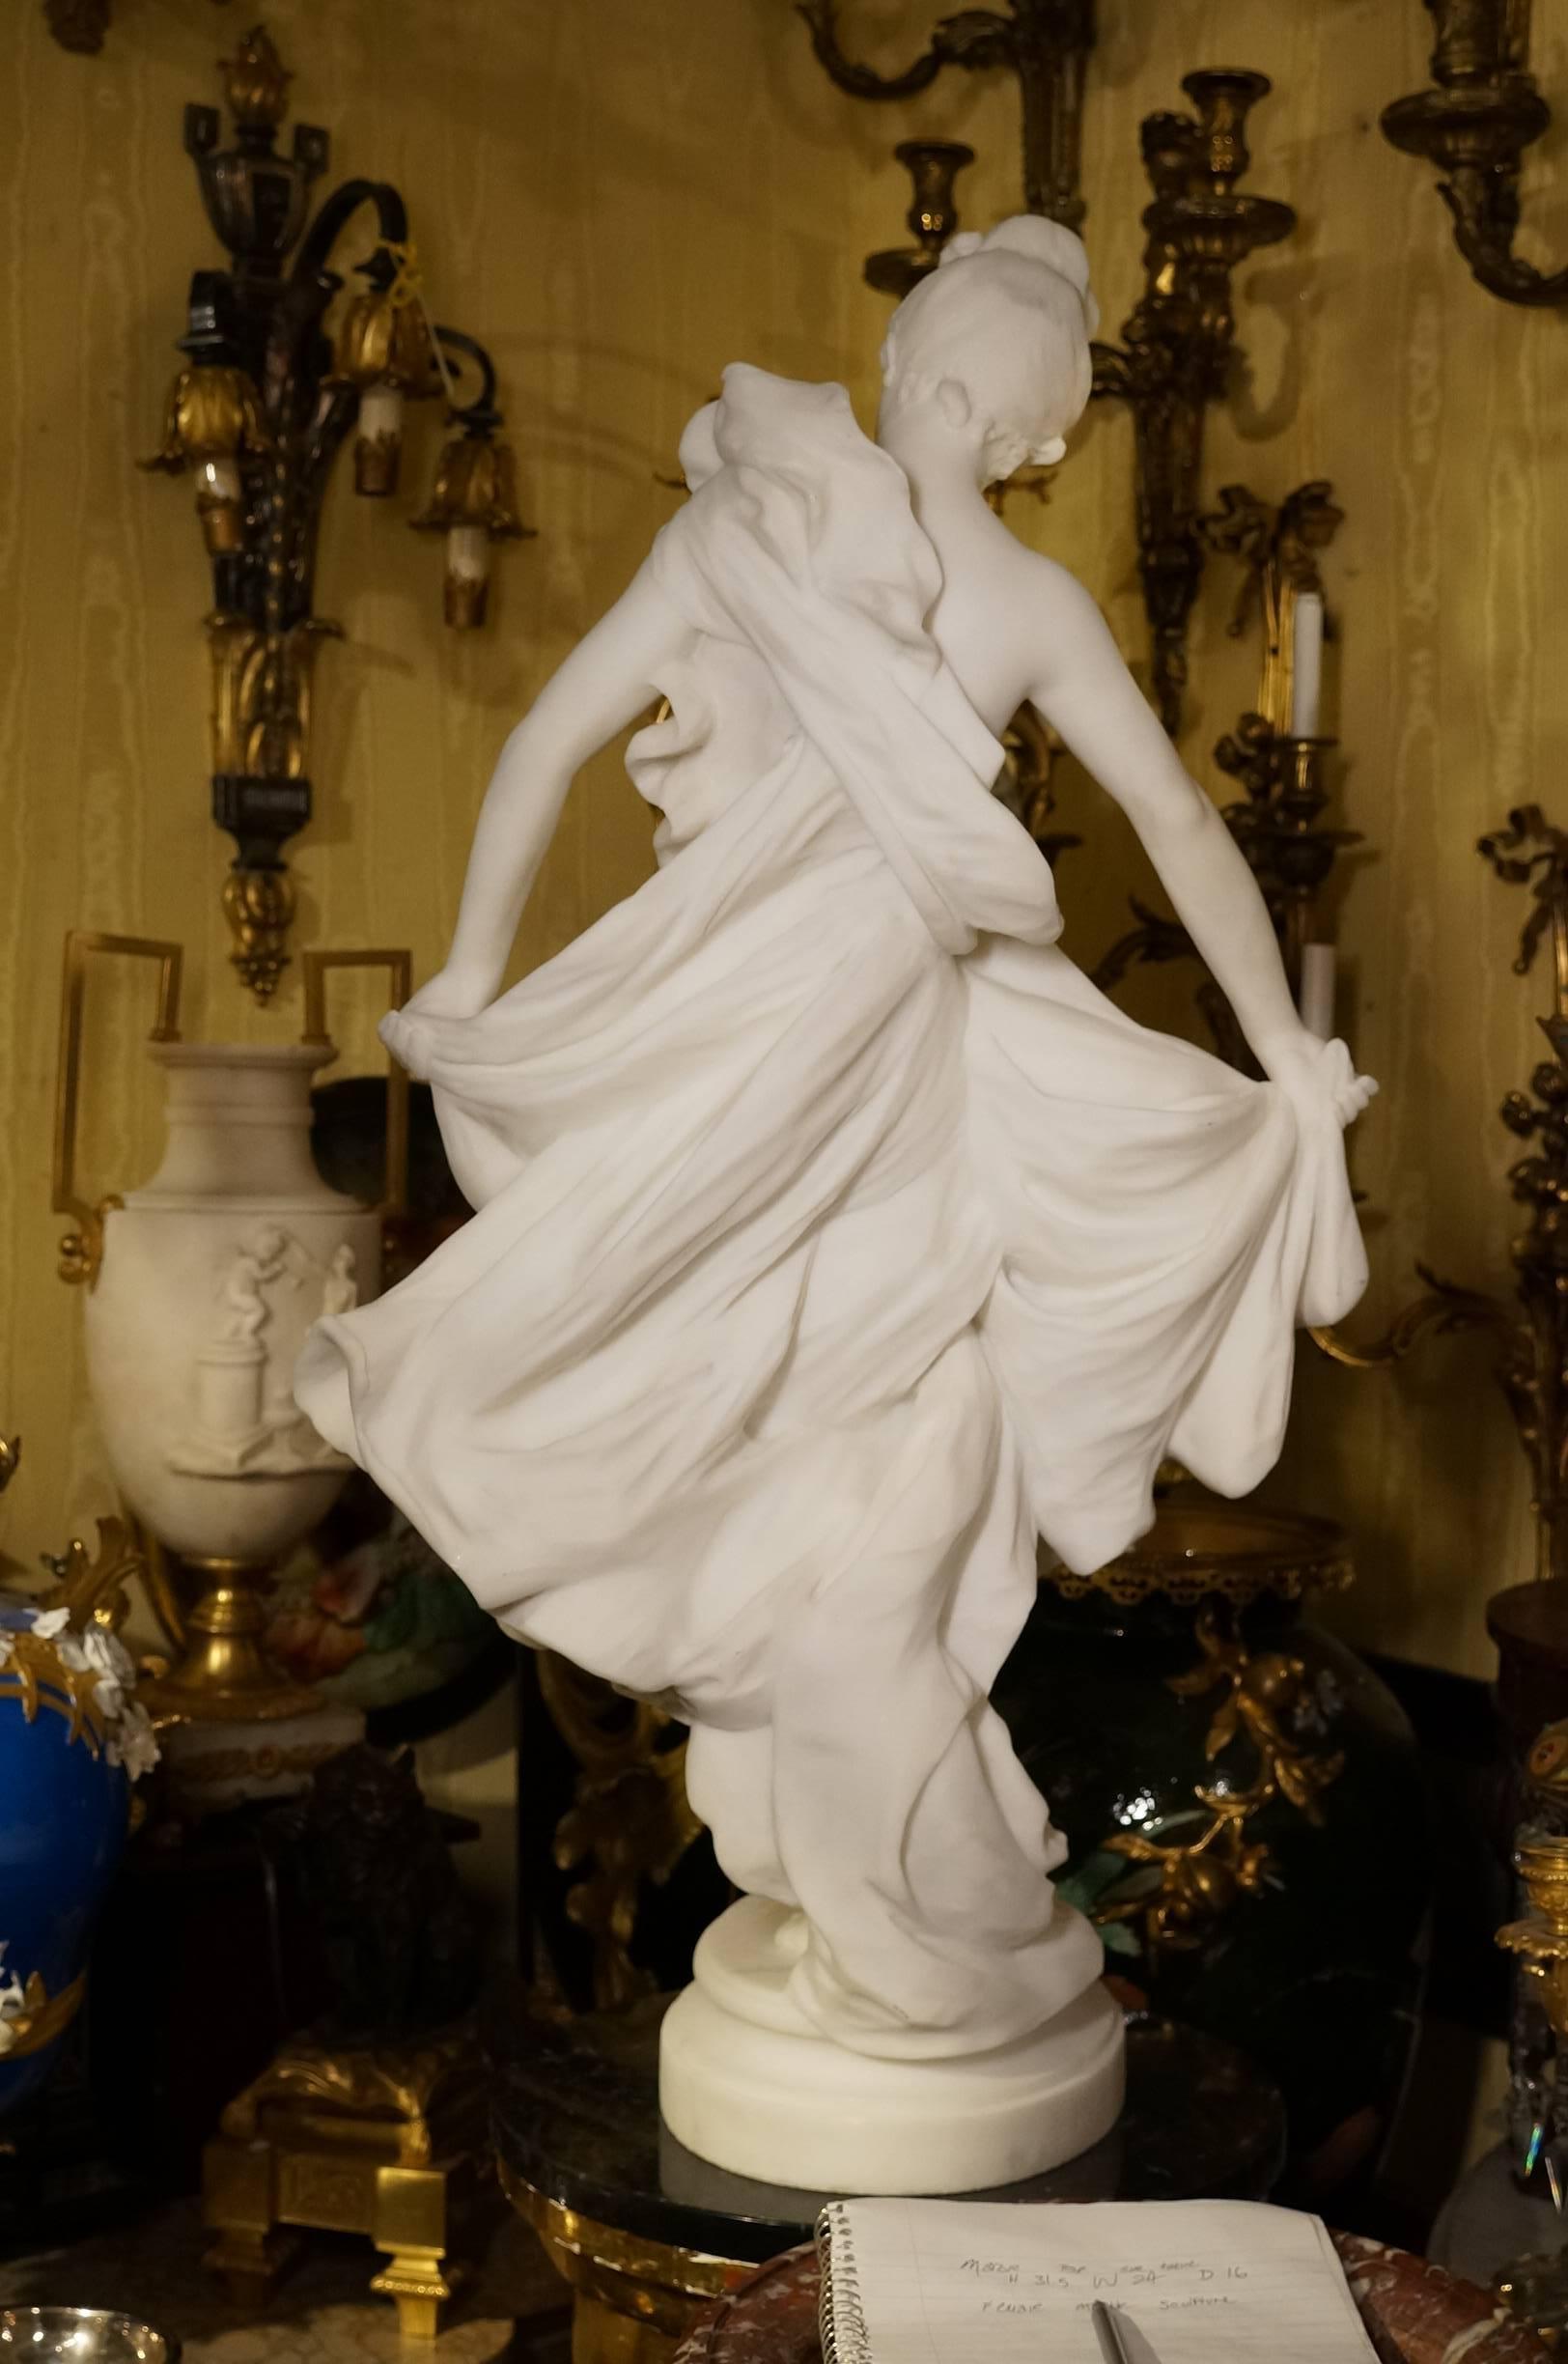 A fantastic carved Italian white marble figure of a standing semi nude maiden showing off her dress.
Signed: Prof A. Biggi Carrara 1896.

Alessandro Biggi, born in Carrara, Italy in 1848, was an Italian sculptor, professor, and politician. Many